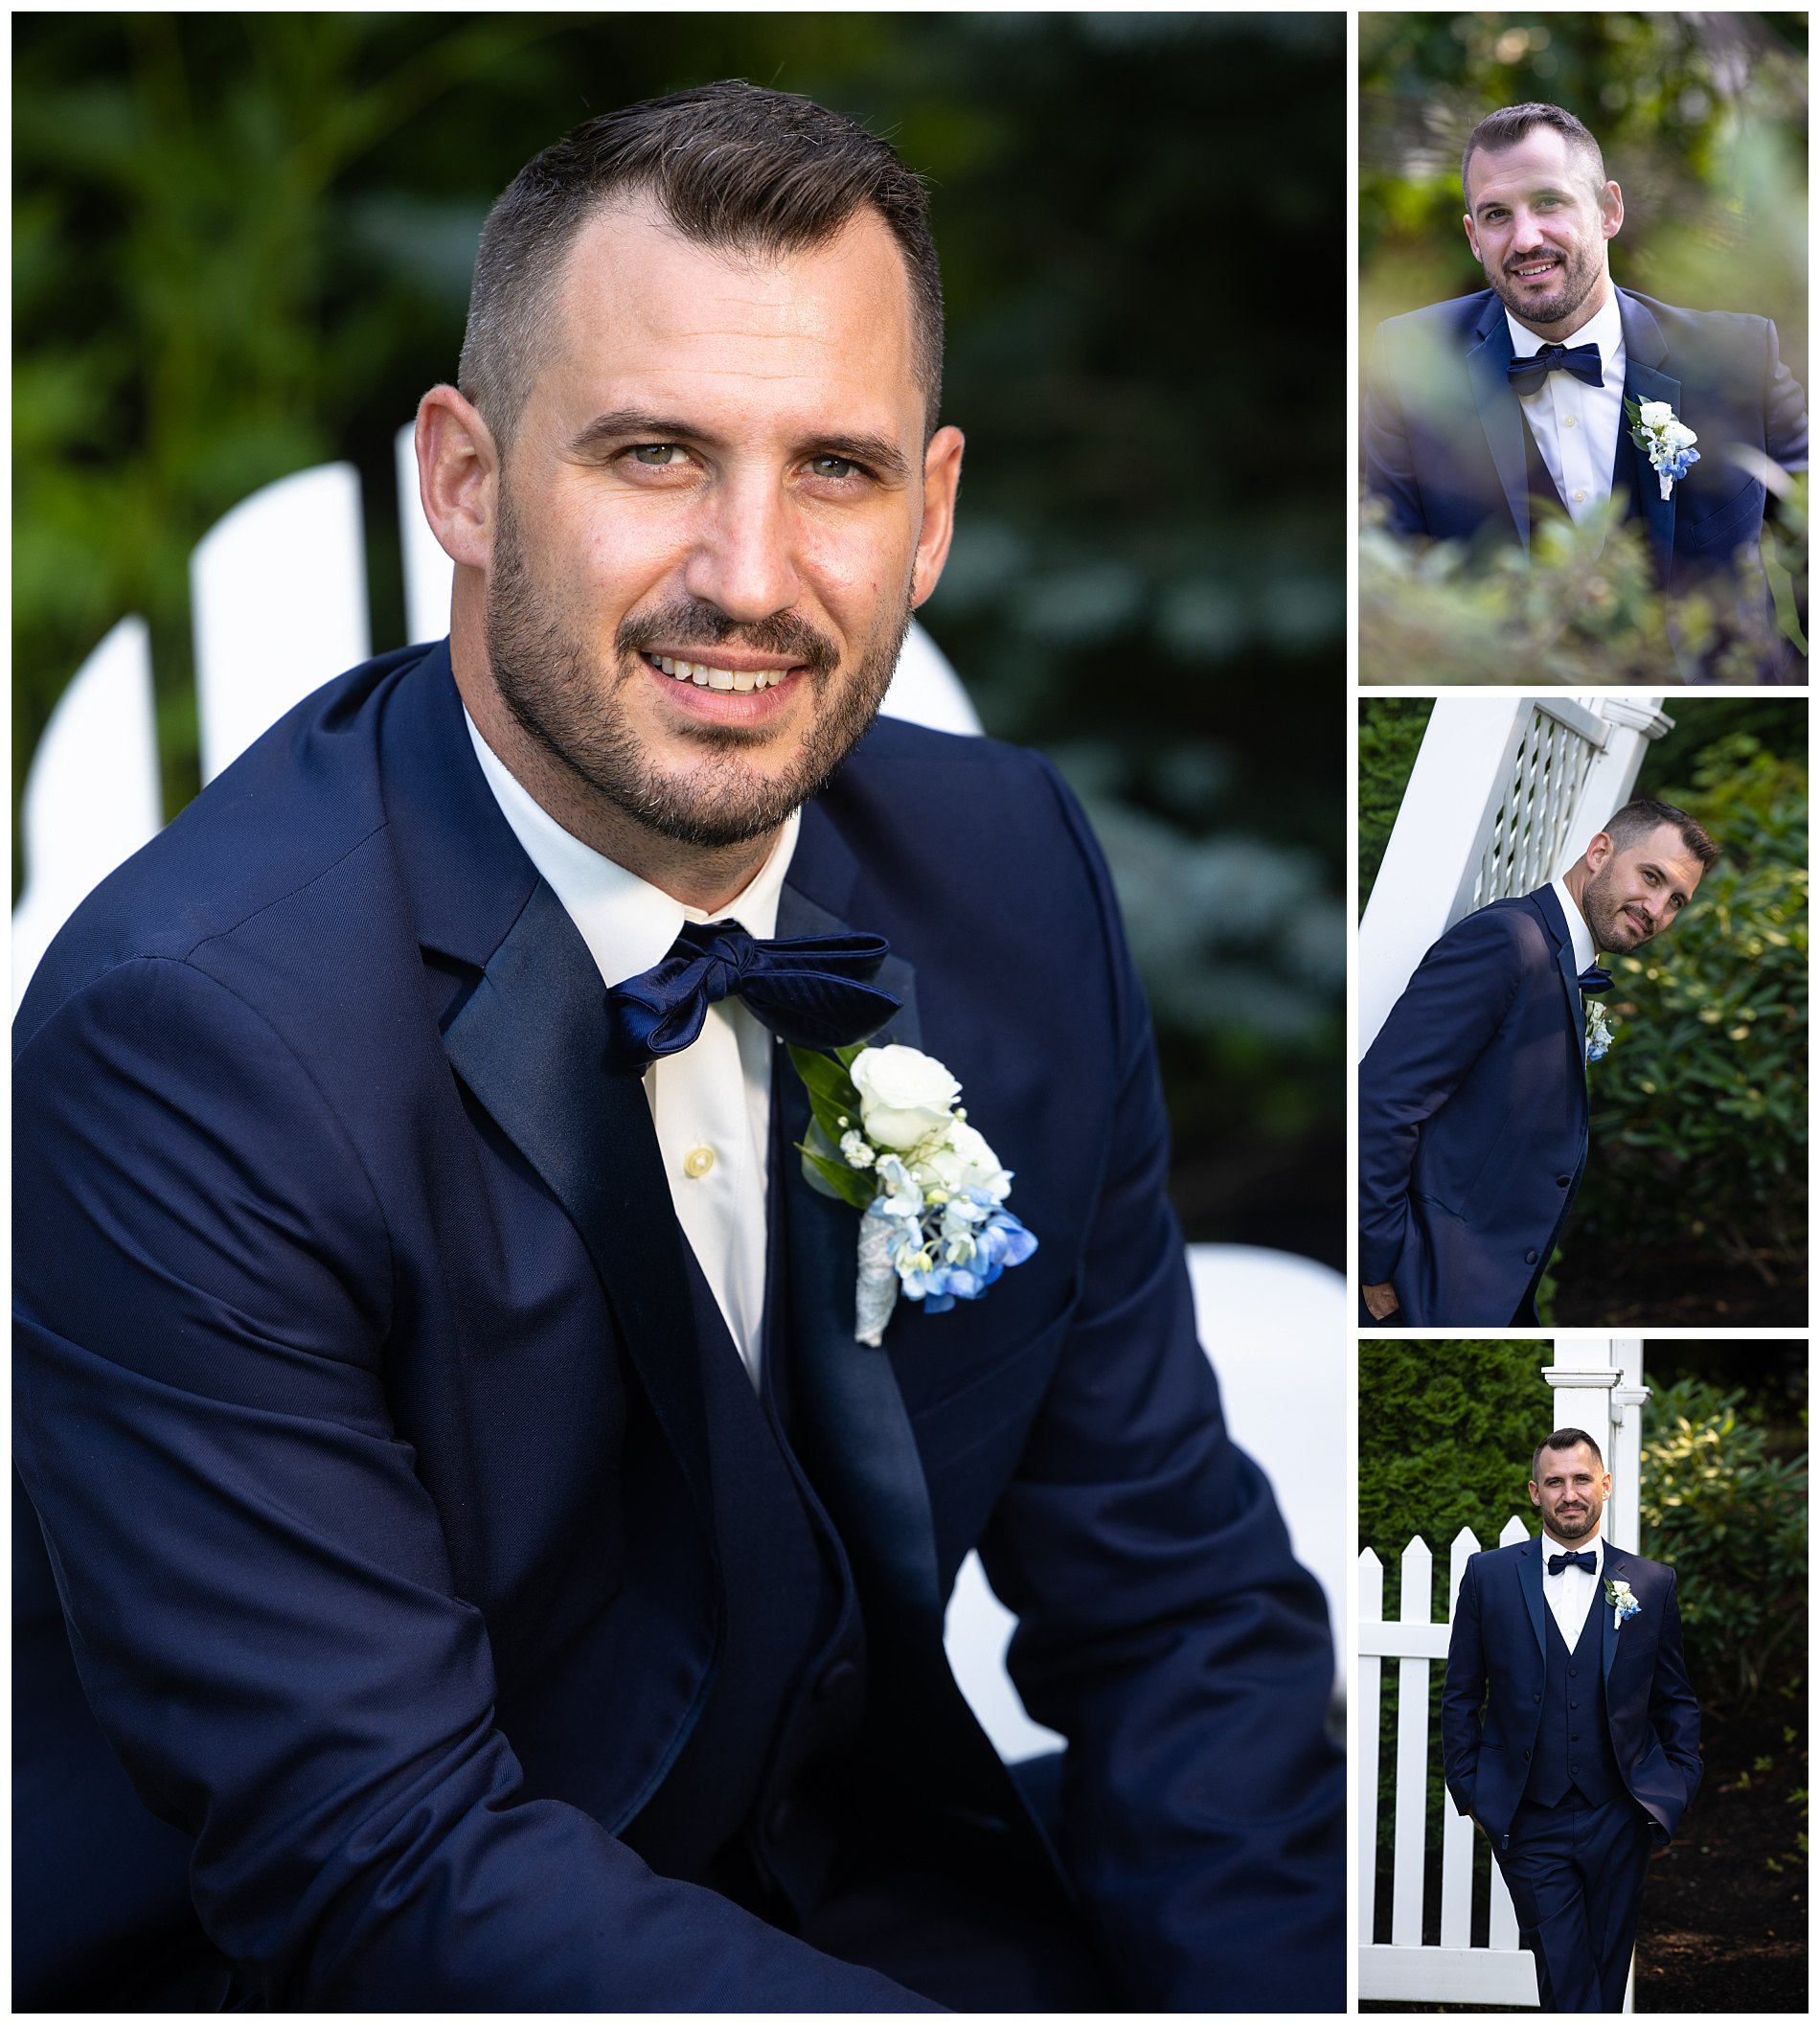 portraits of groom at wedding